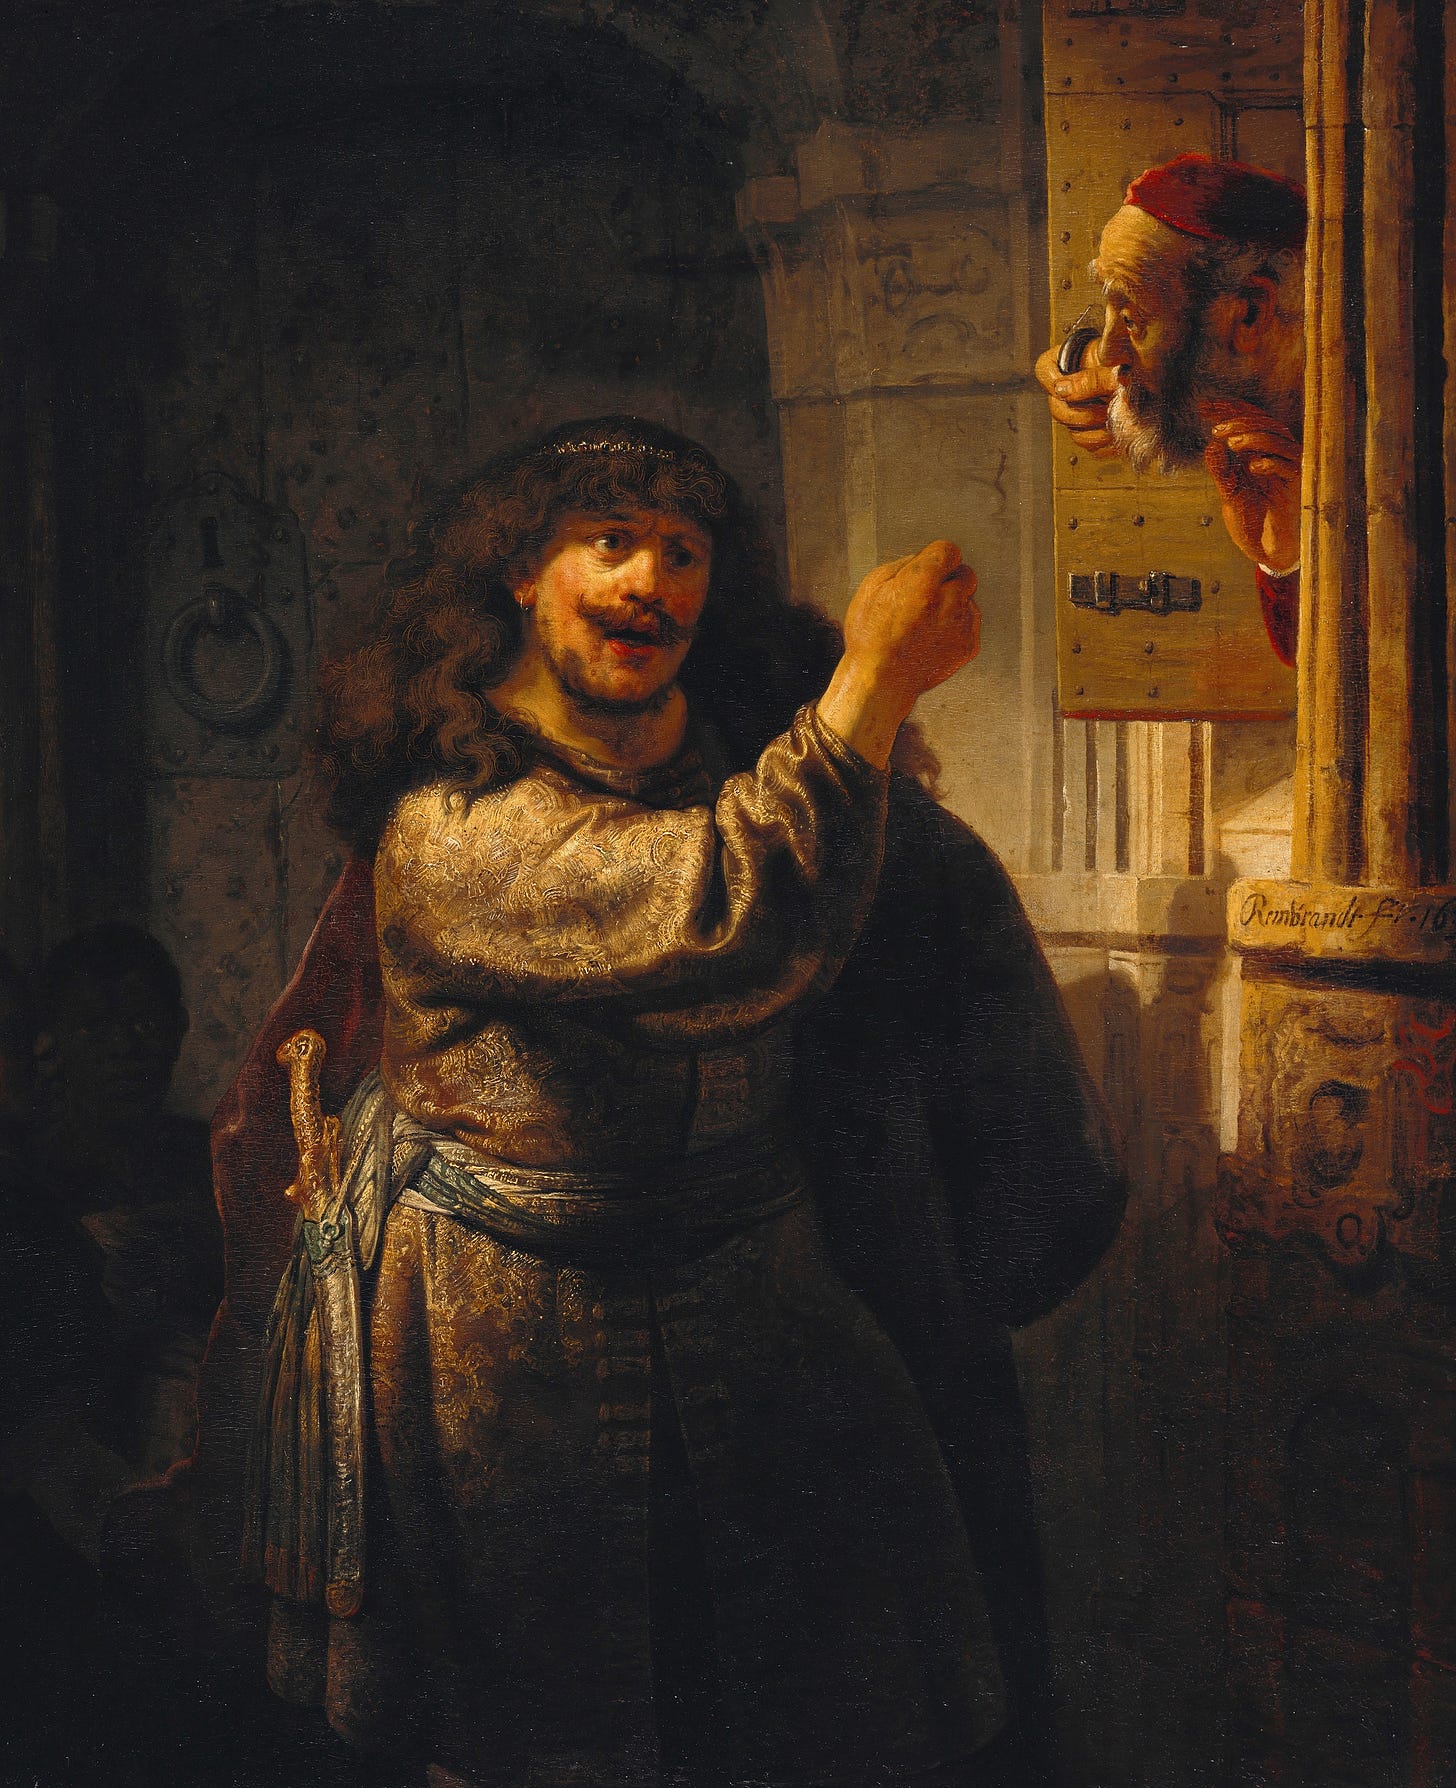 Samson Threatening His Father-in-Law (1635) by Rembrandt van Rijn (Dutch, 1606-1669)